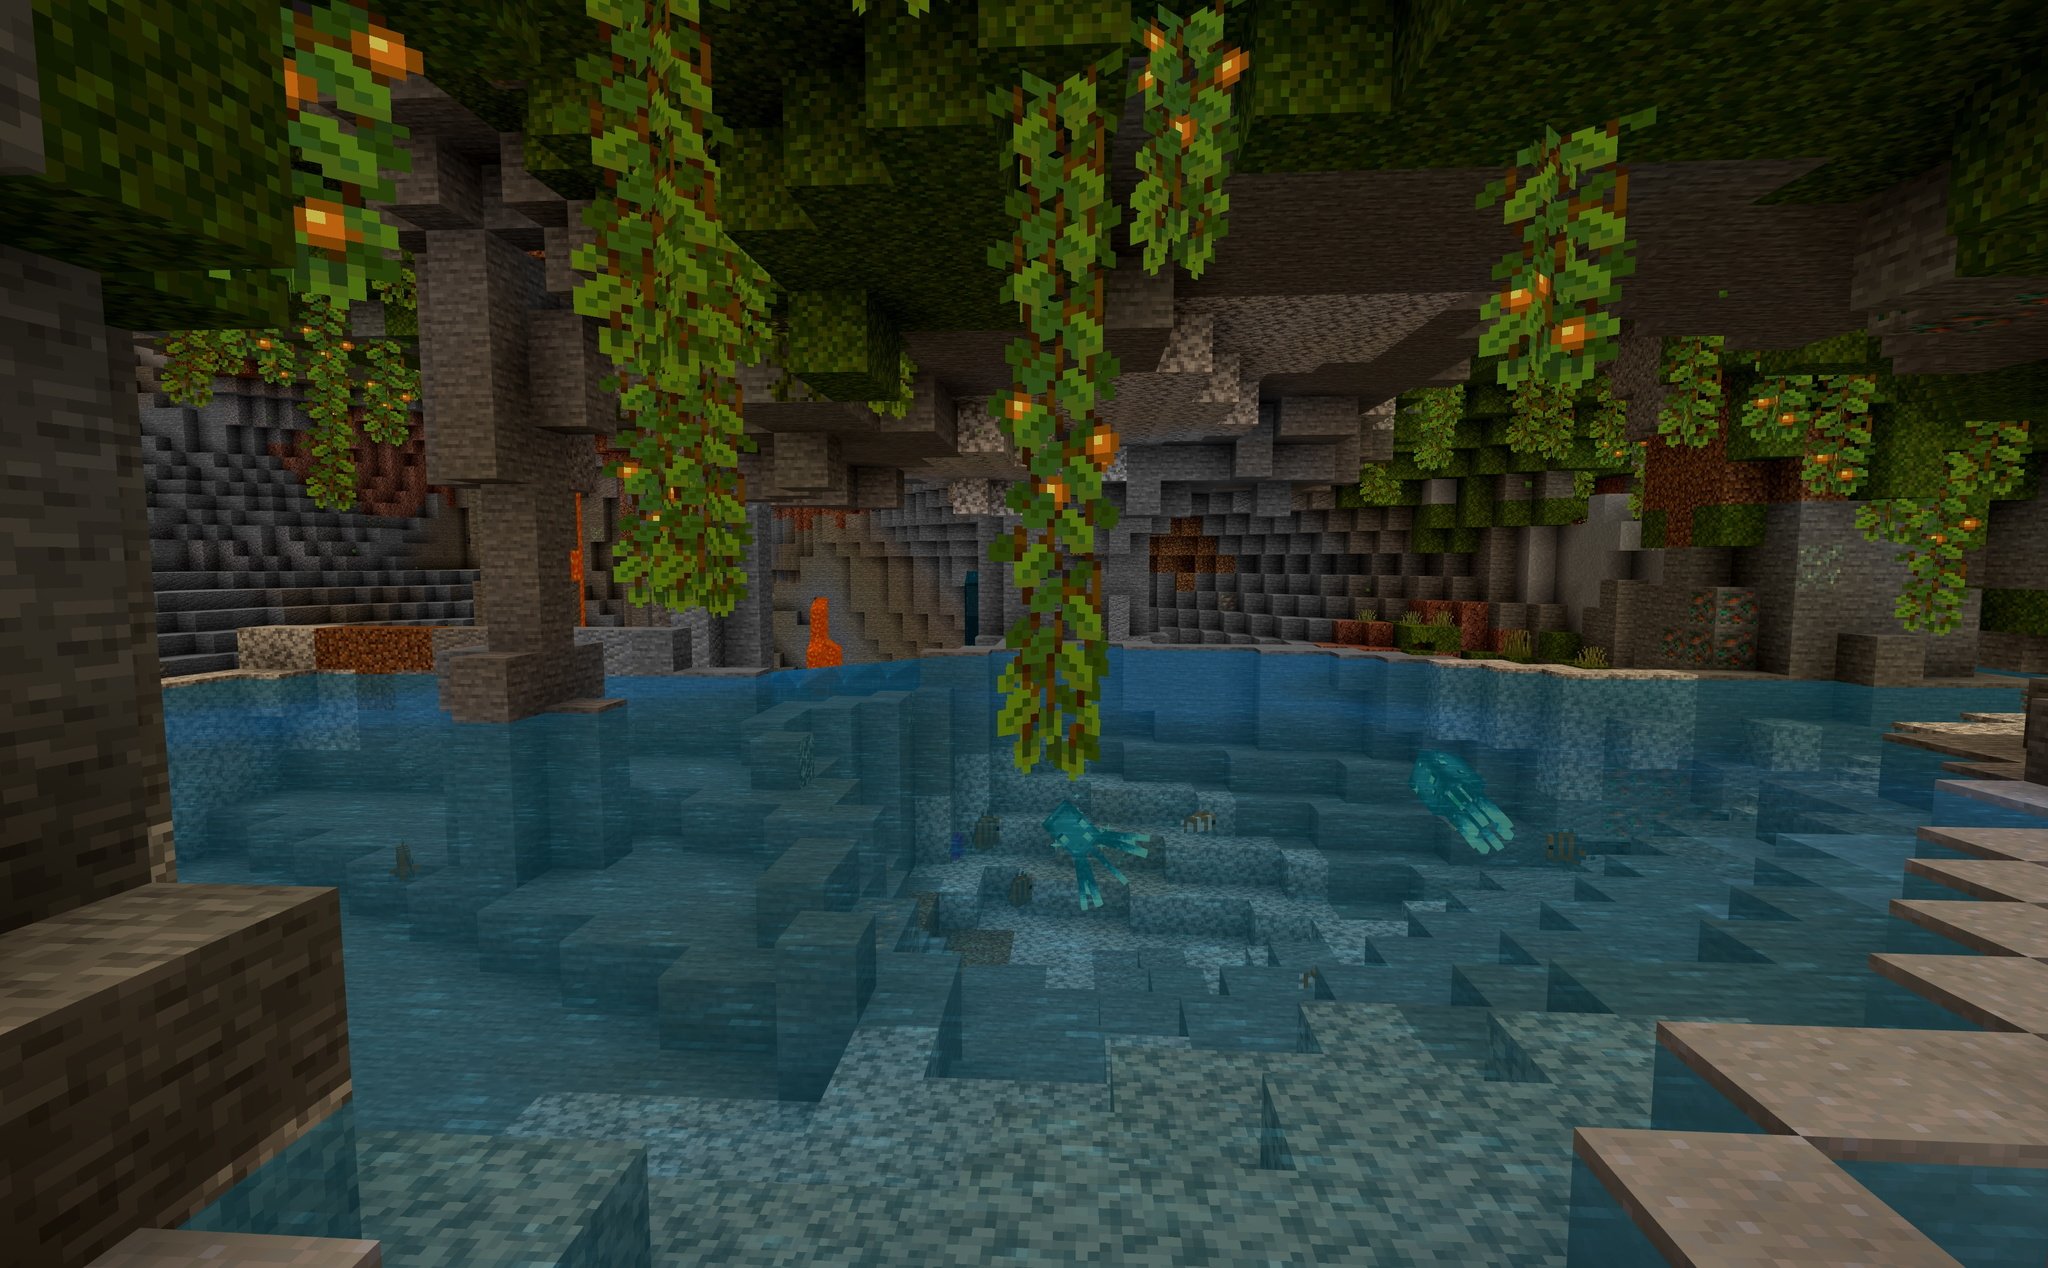 minecraft-caves-and-cliffs-update-1.18.0.21-beta-image-01.jpg